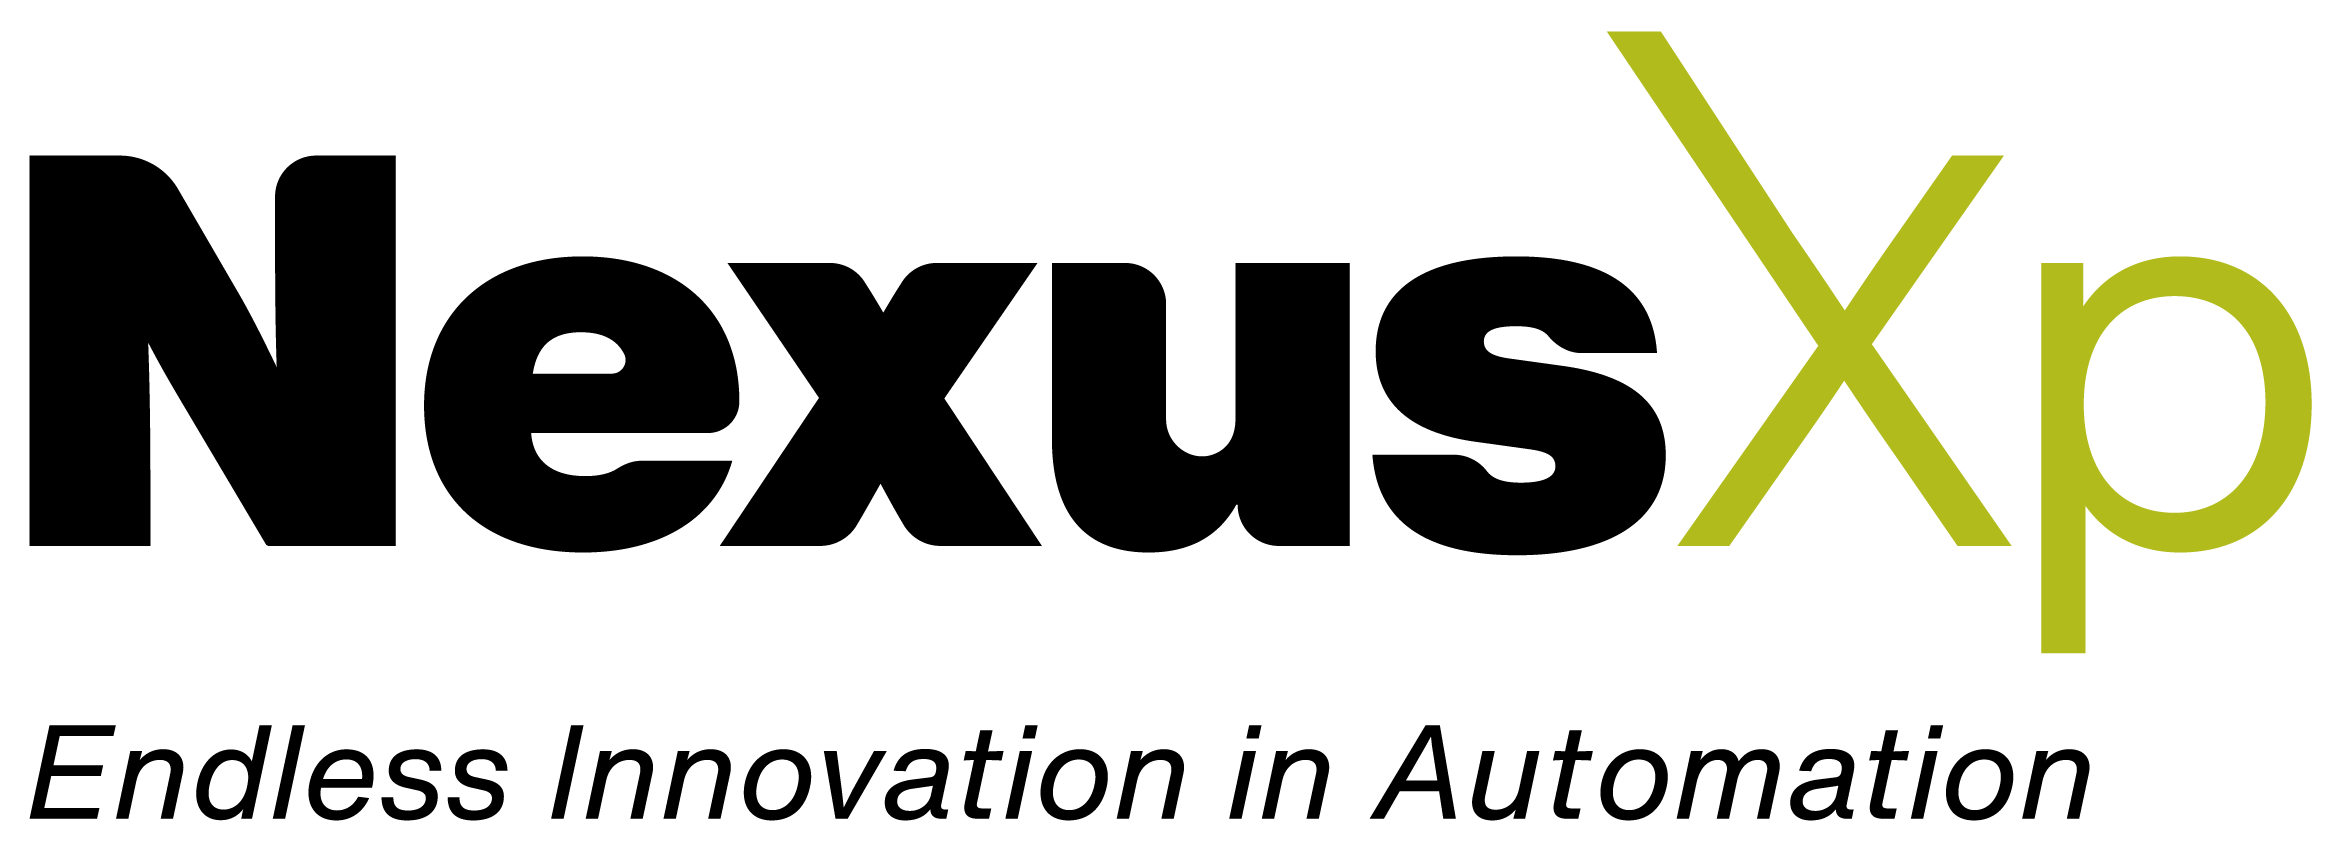 NexusXp logo